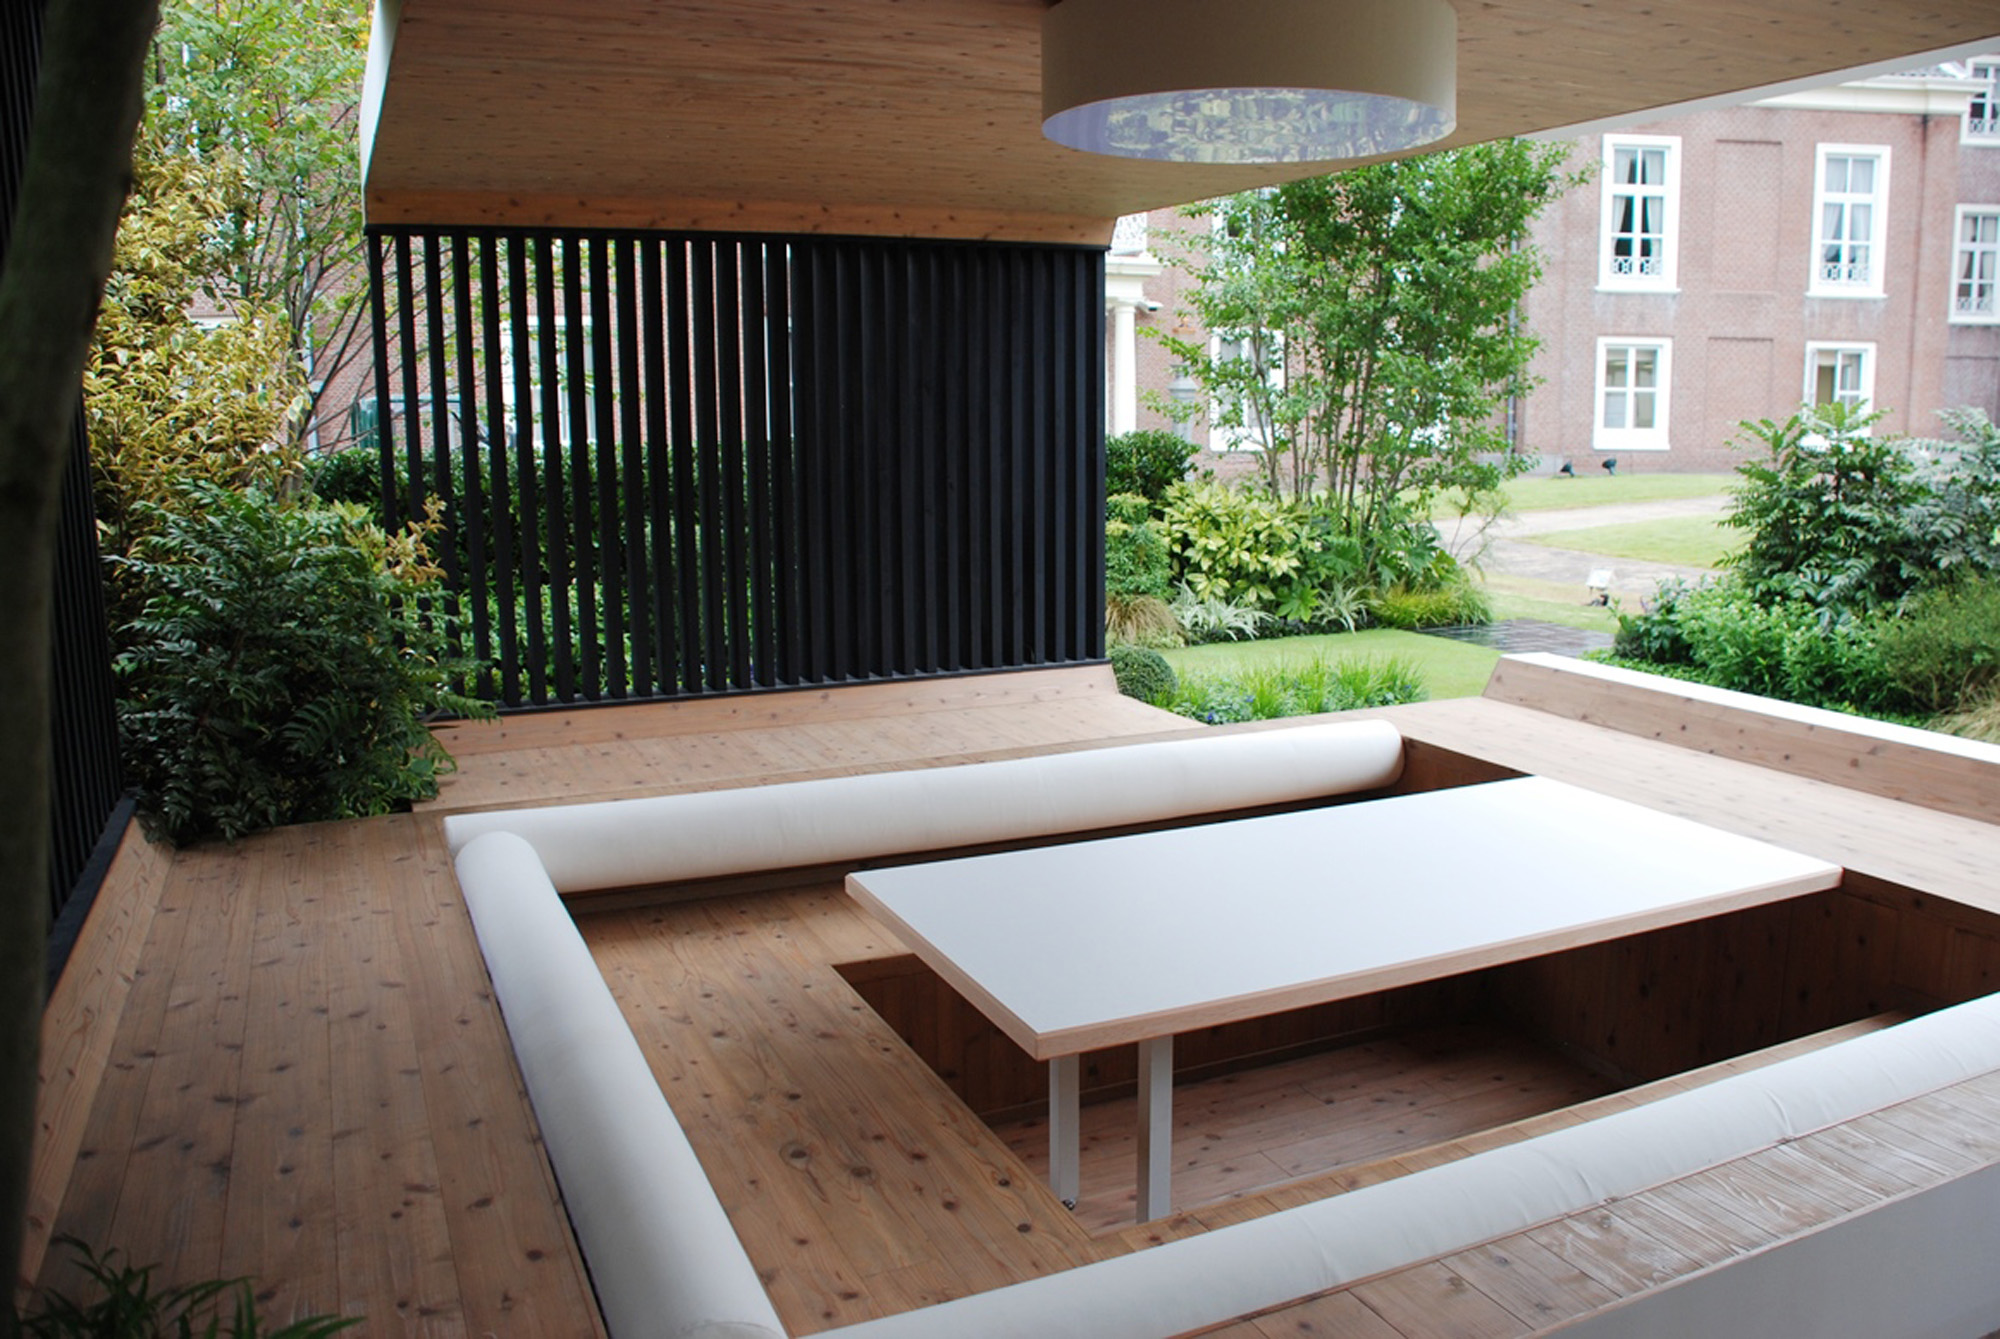 Sunken Table by Jim Fogarty - contemporary landscape design in London